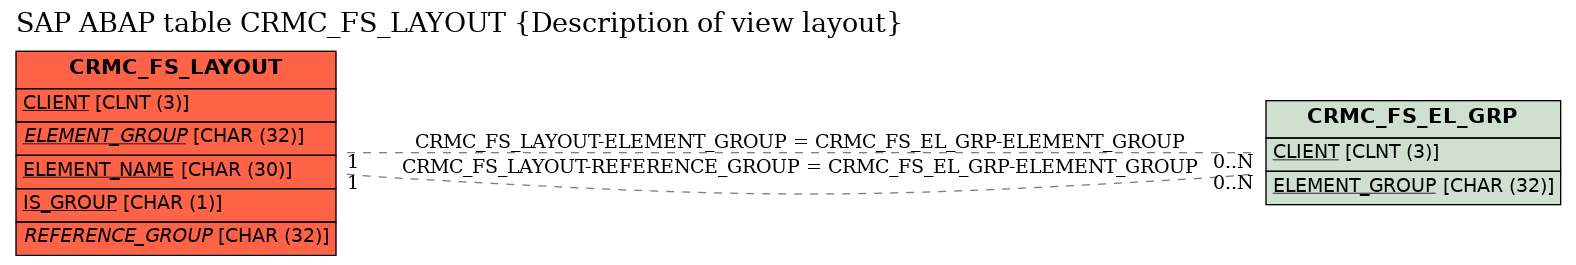 E-R Diagram for table CRMC_FS_LAYOUT (Description of view layout)